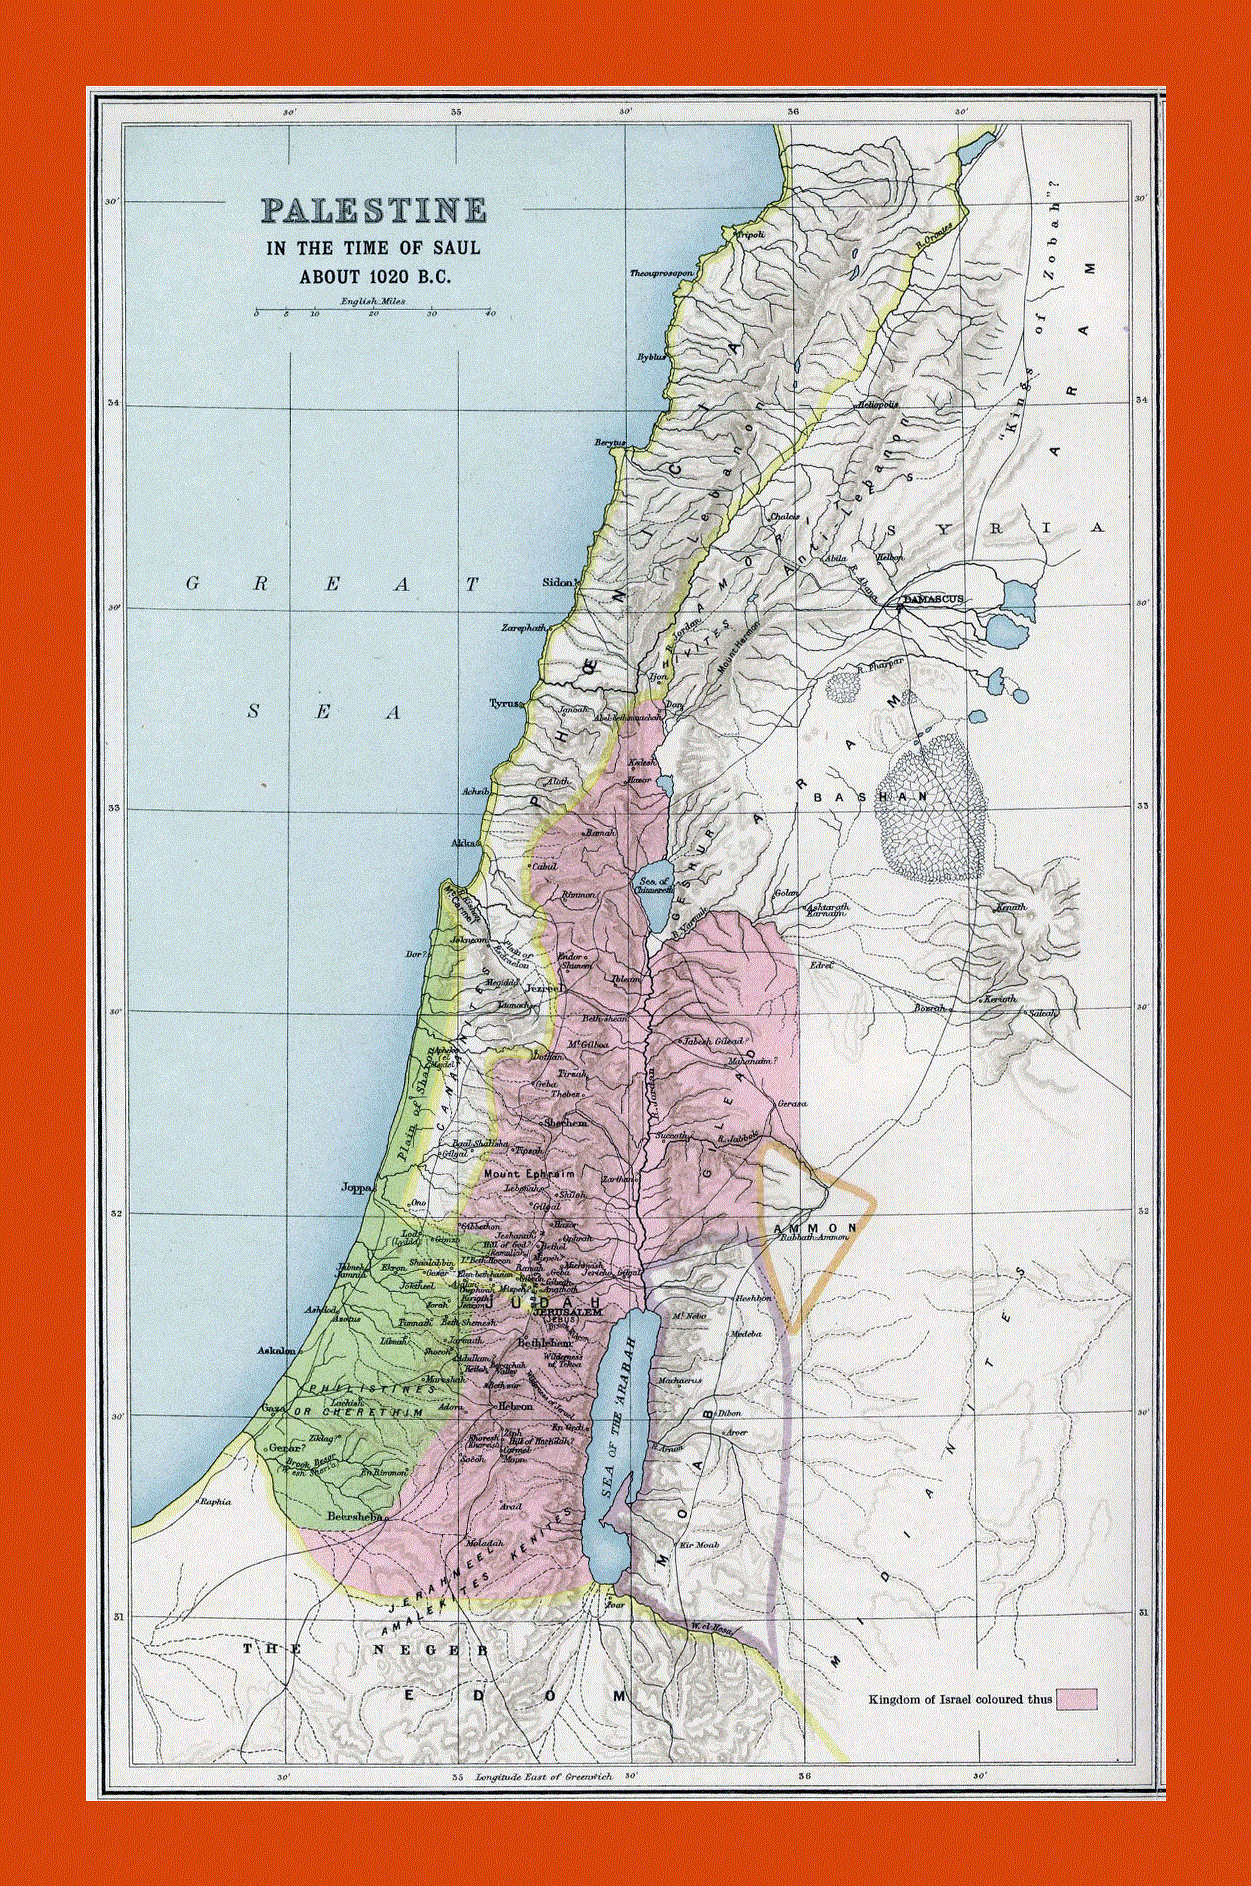 Old map of Palestine 1020 B.C.